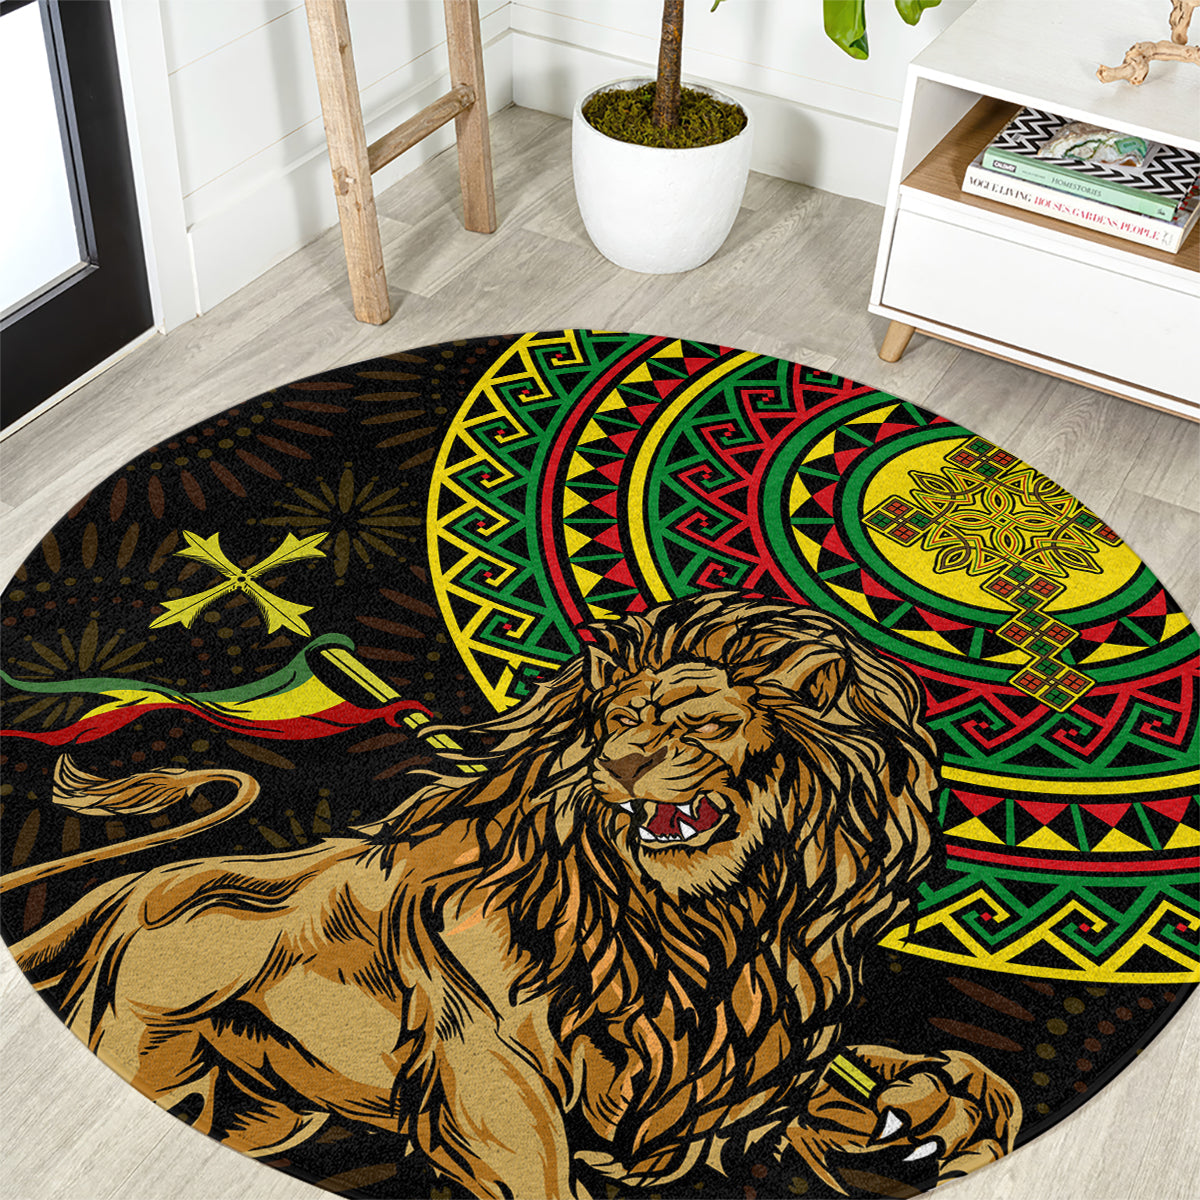 Ethiopia National Day Round Carpet Lion Of Judah African Pattern